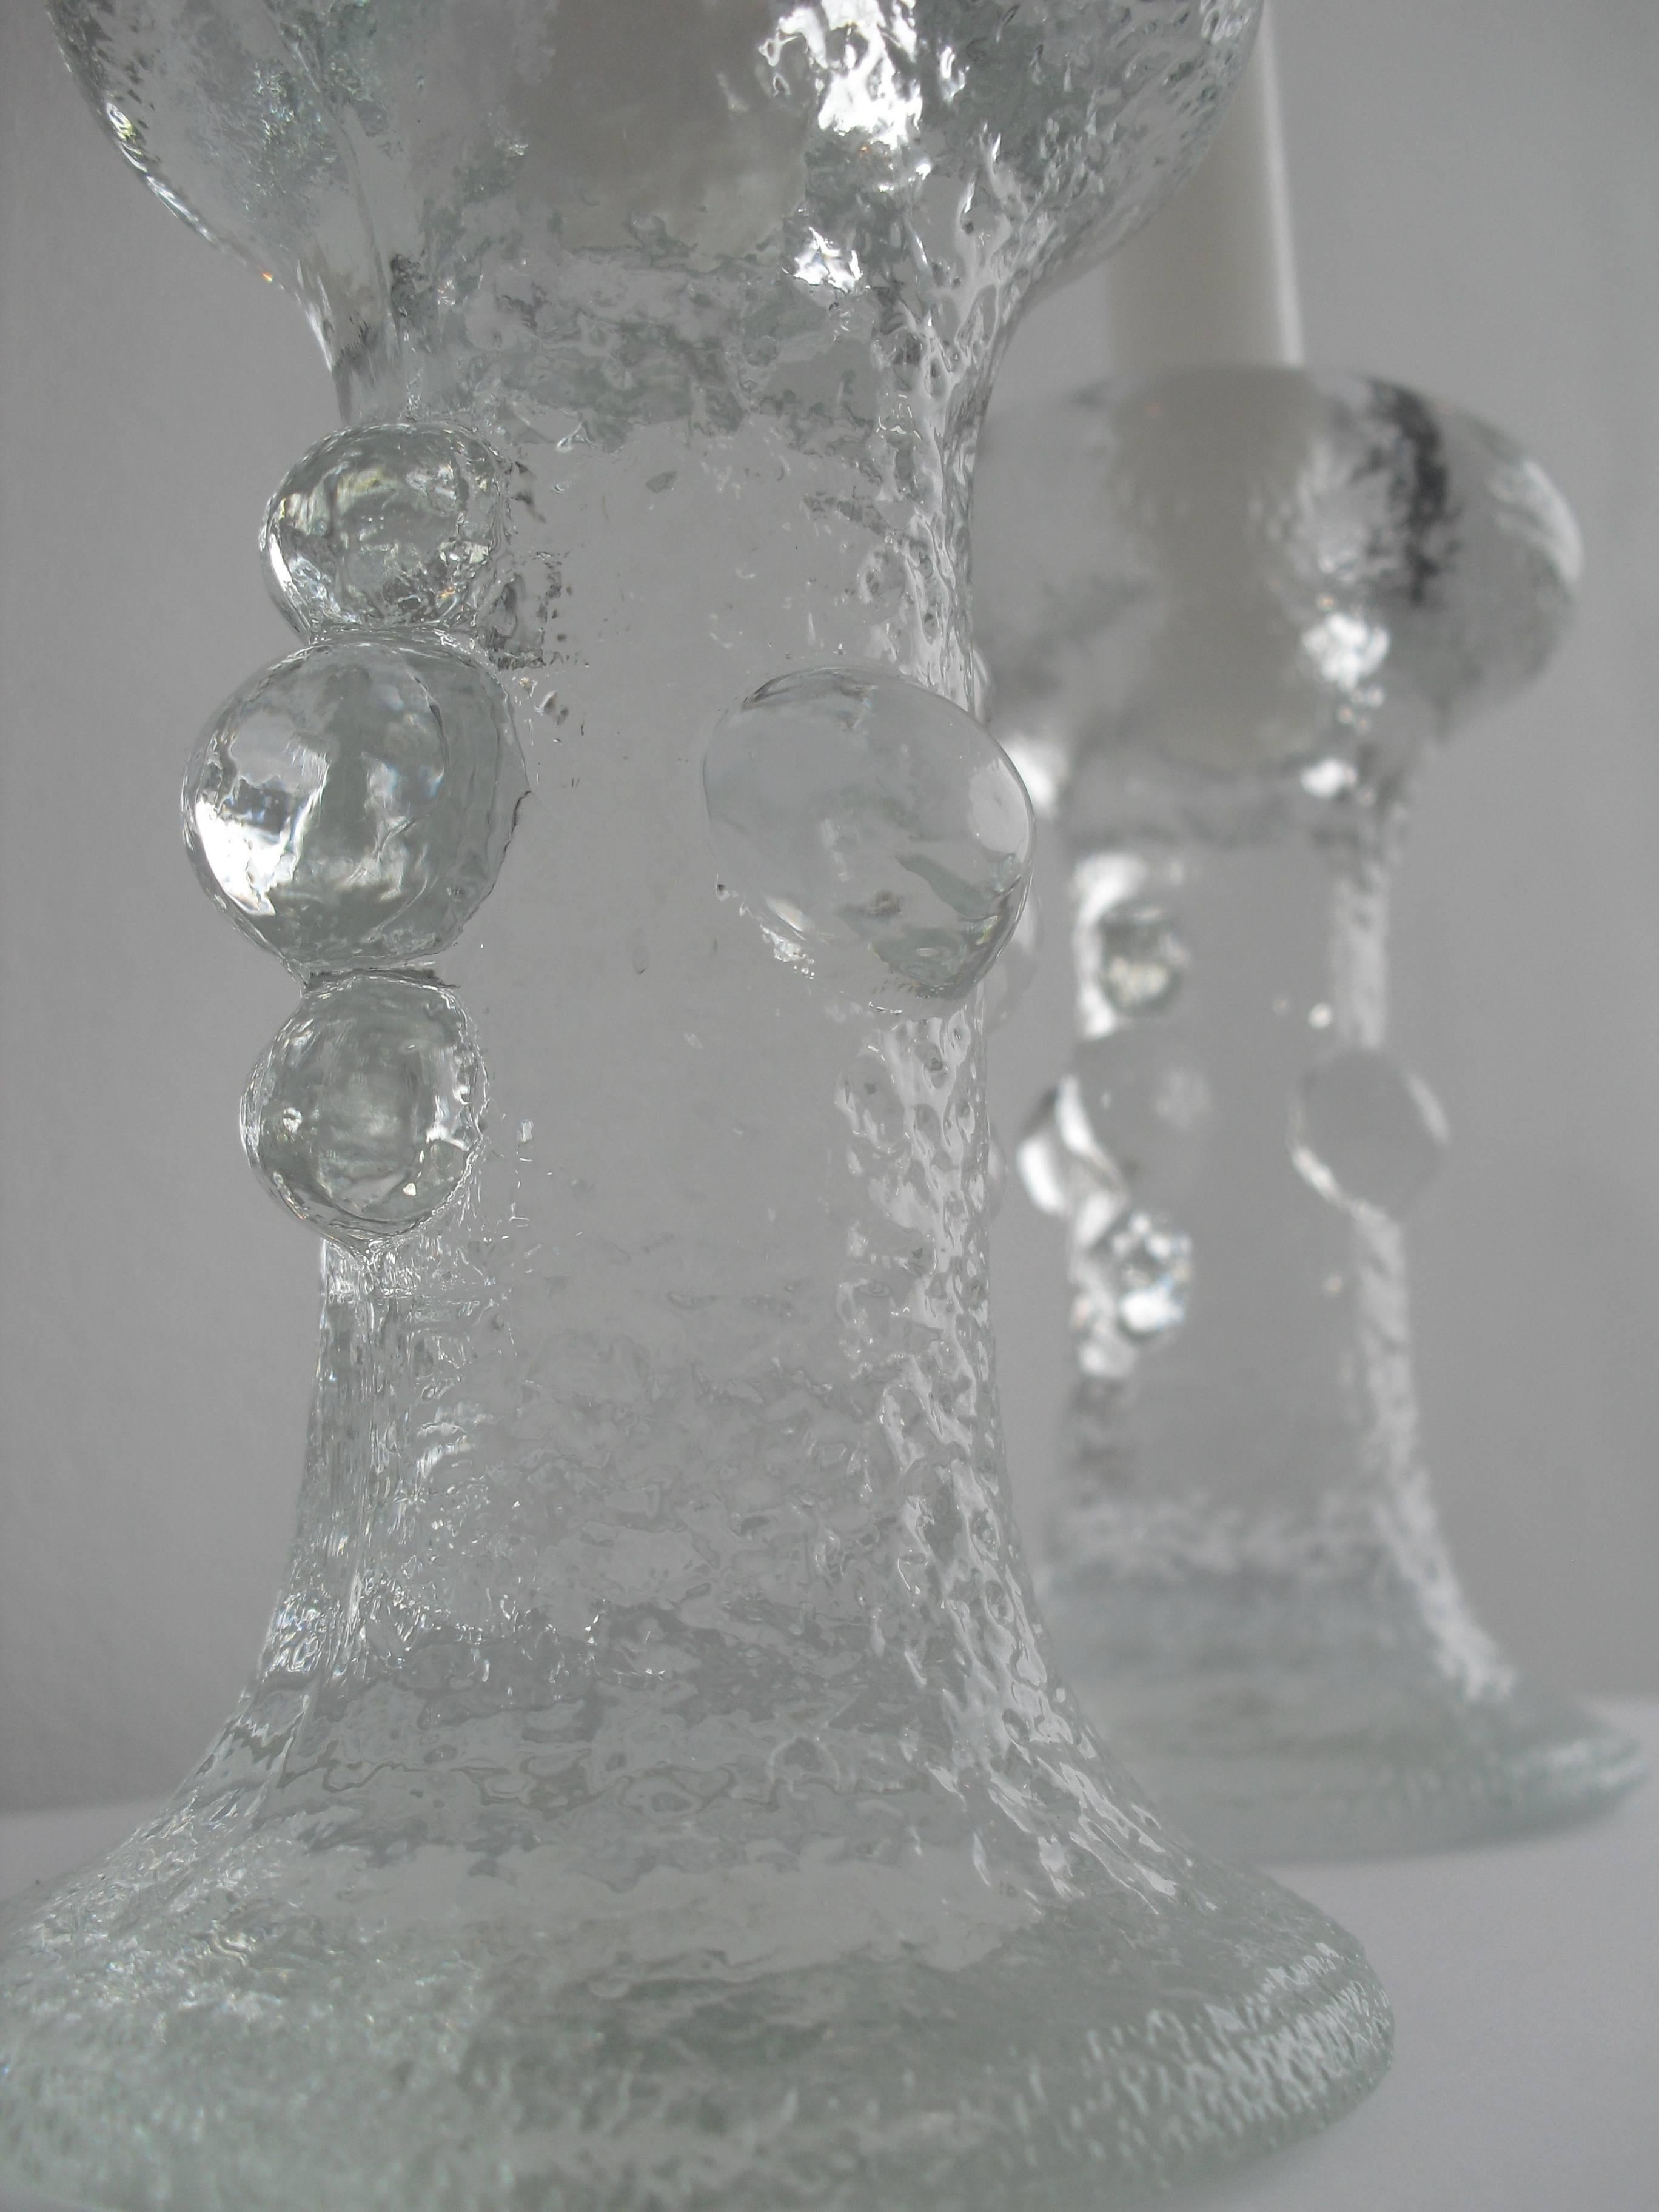 Molded Set Swedish Crystal Glass Pukeberg Candleholders by Staffan Gellerstedt, 1970s For Sale